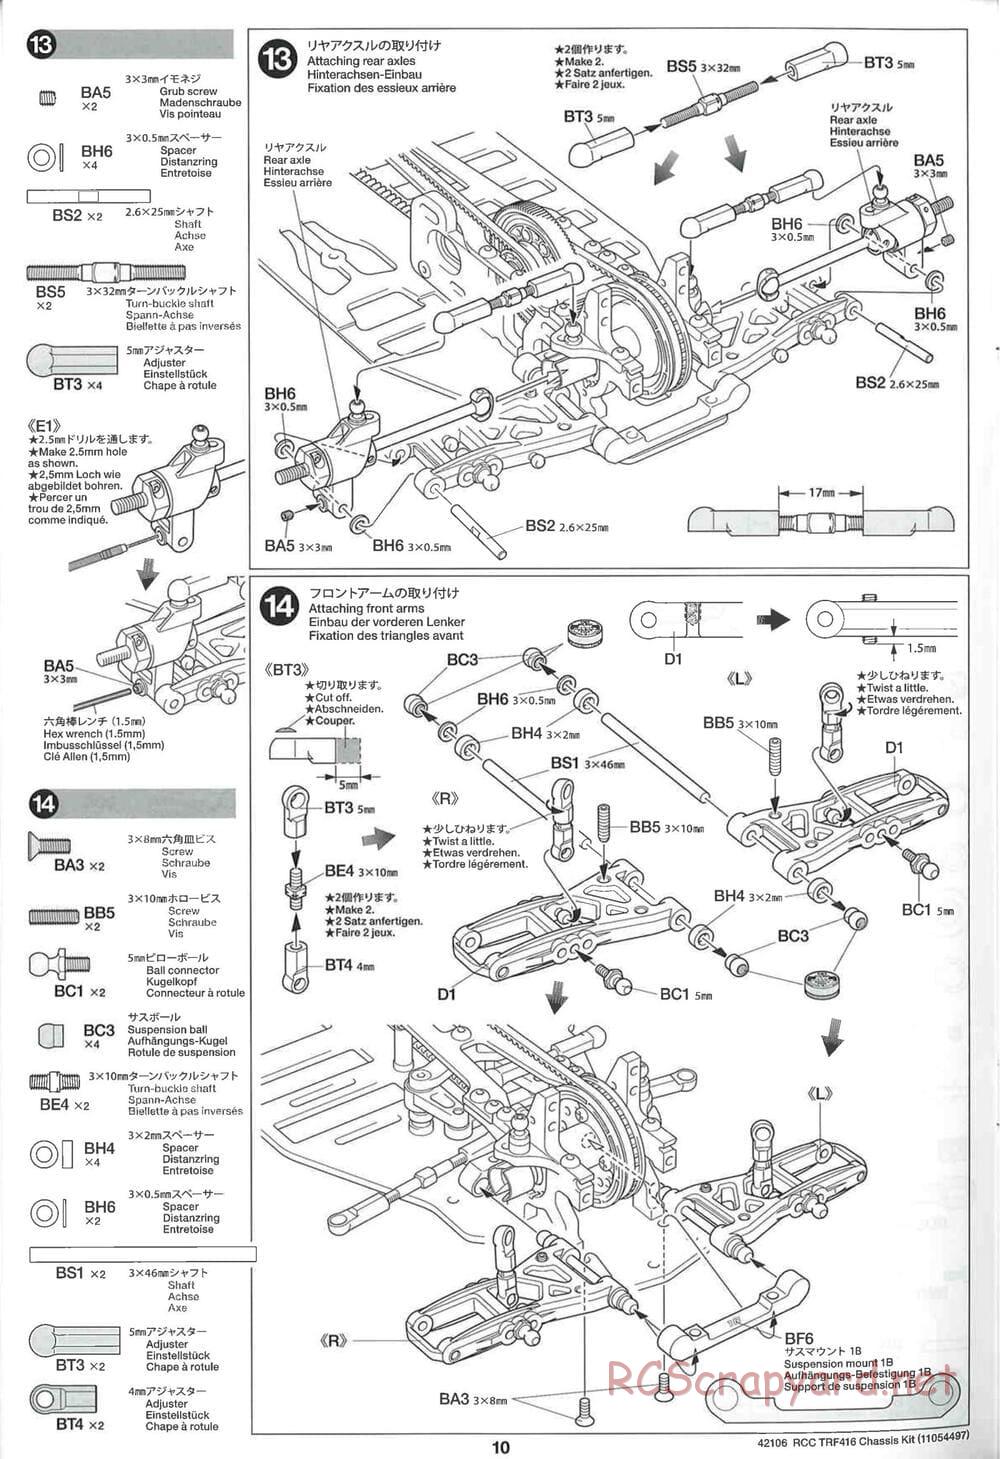 Tamiya - TRF416 Chassis - Manual - Page 10